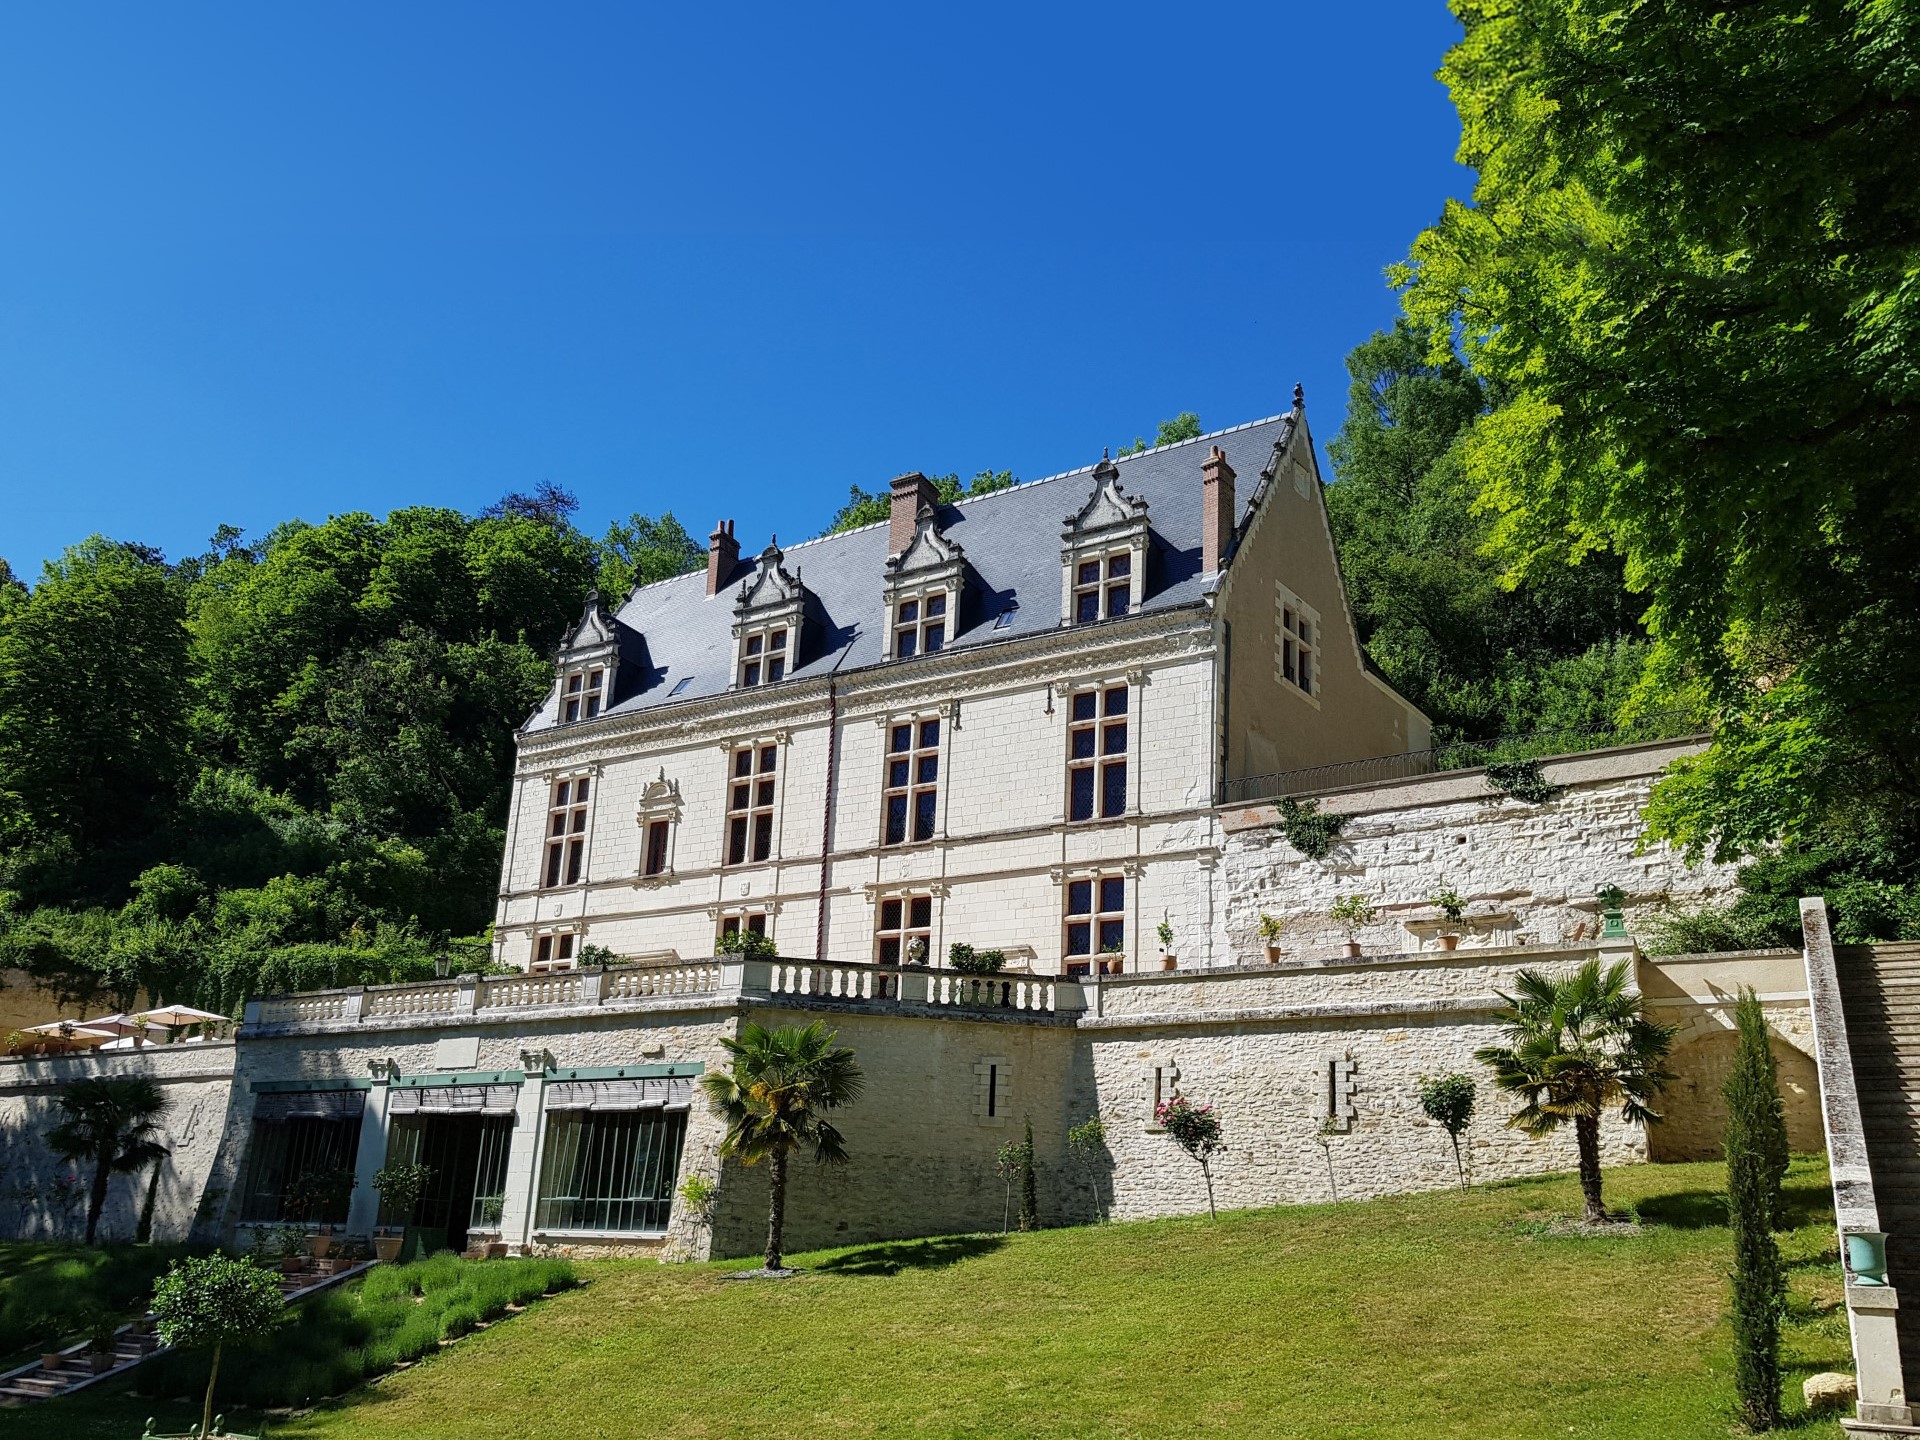 Château Gaillard Amboise